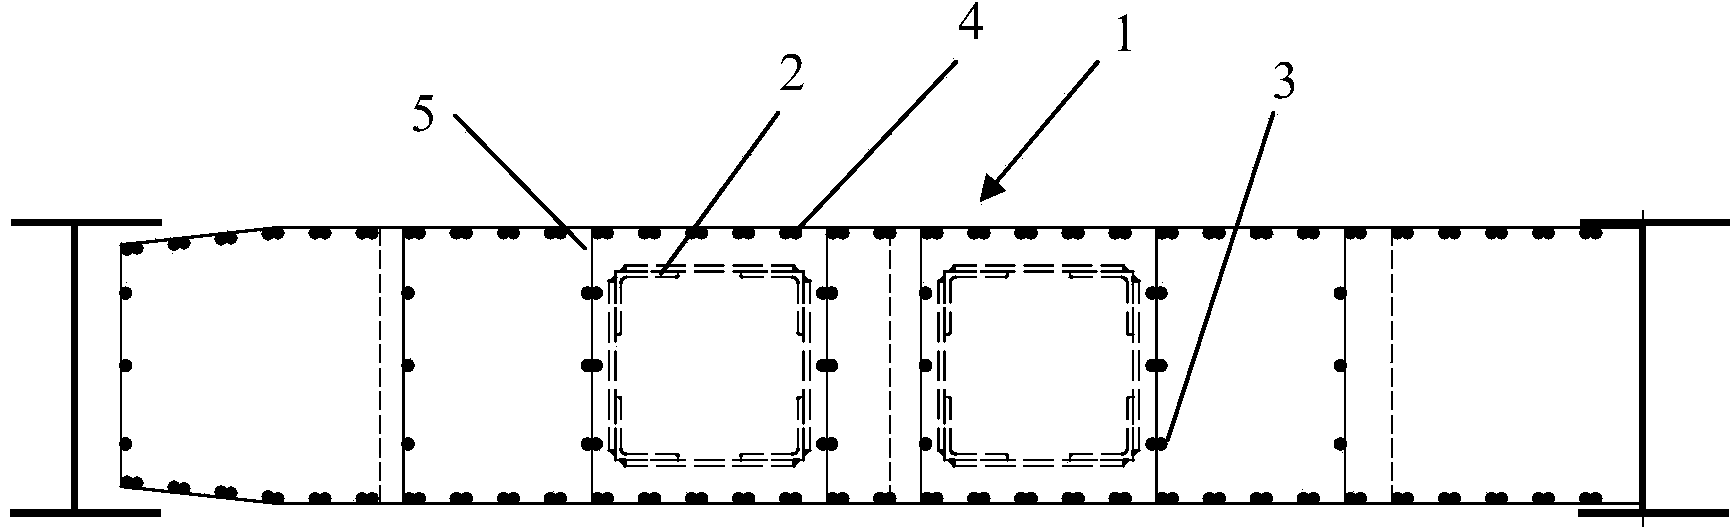 Construction method for installing underground lattice column